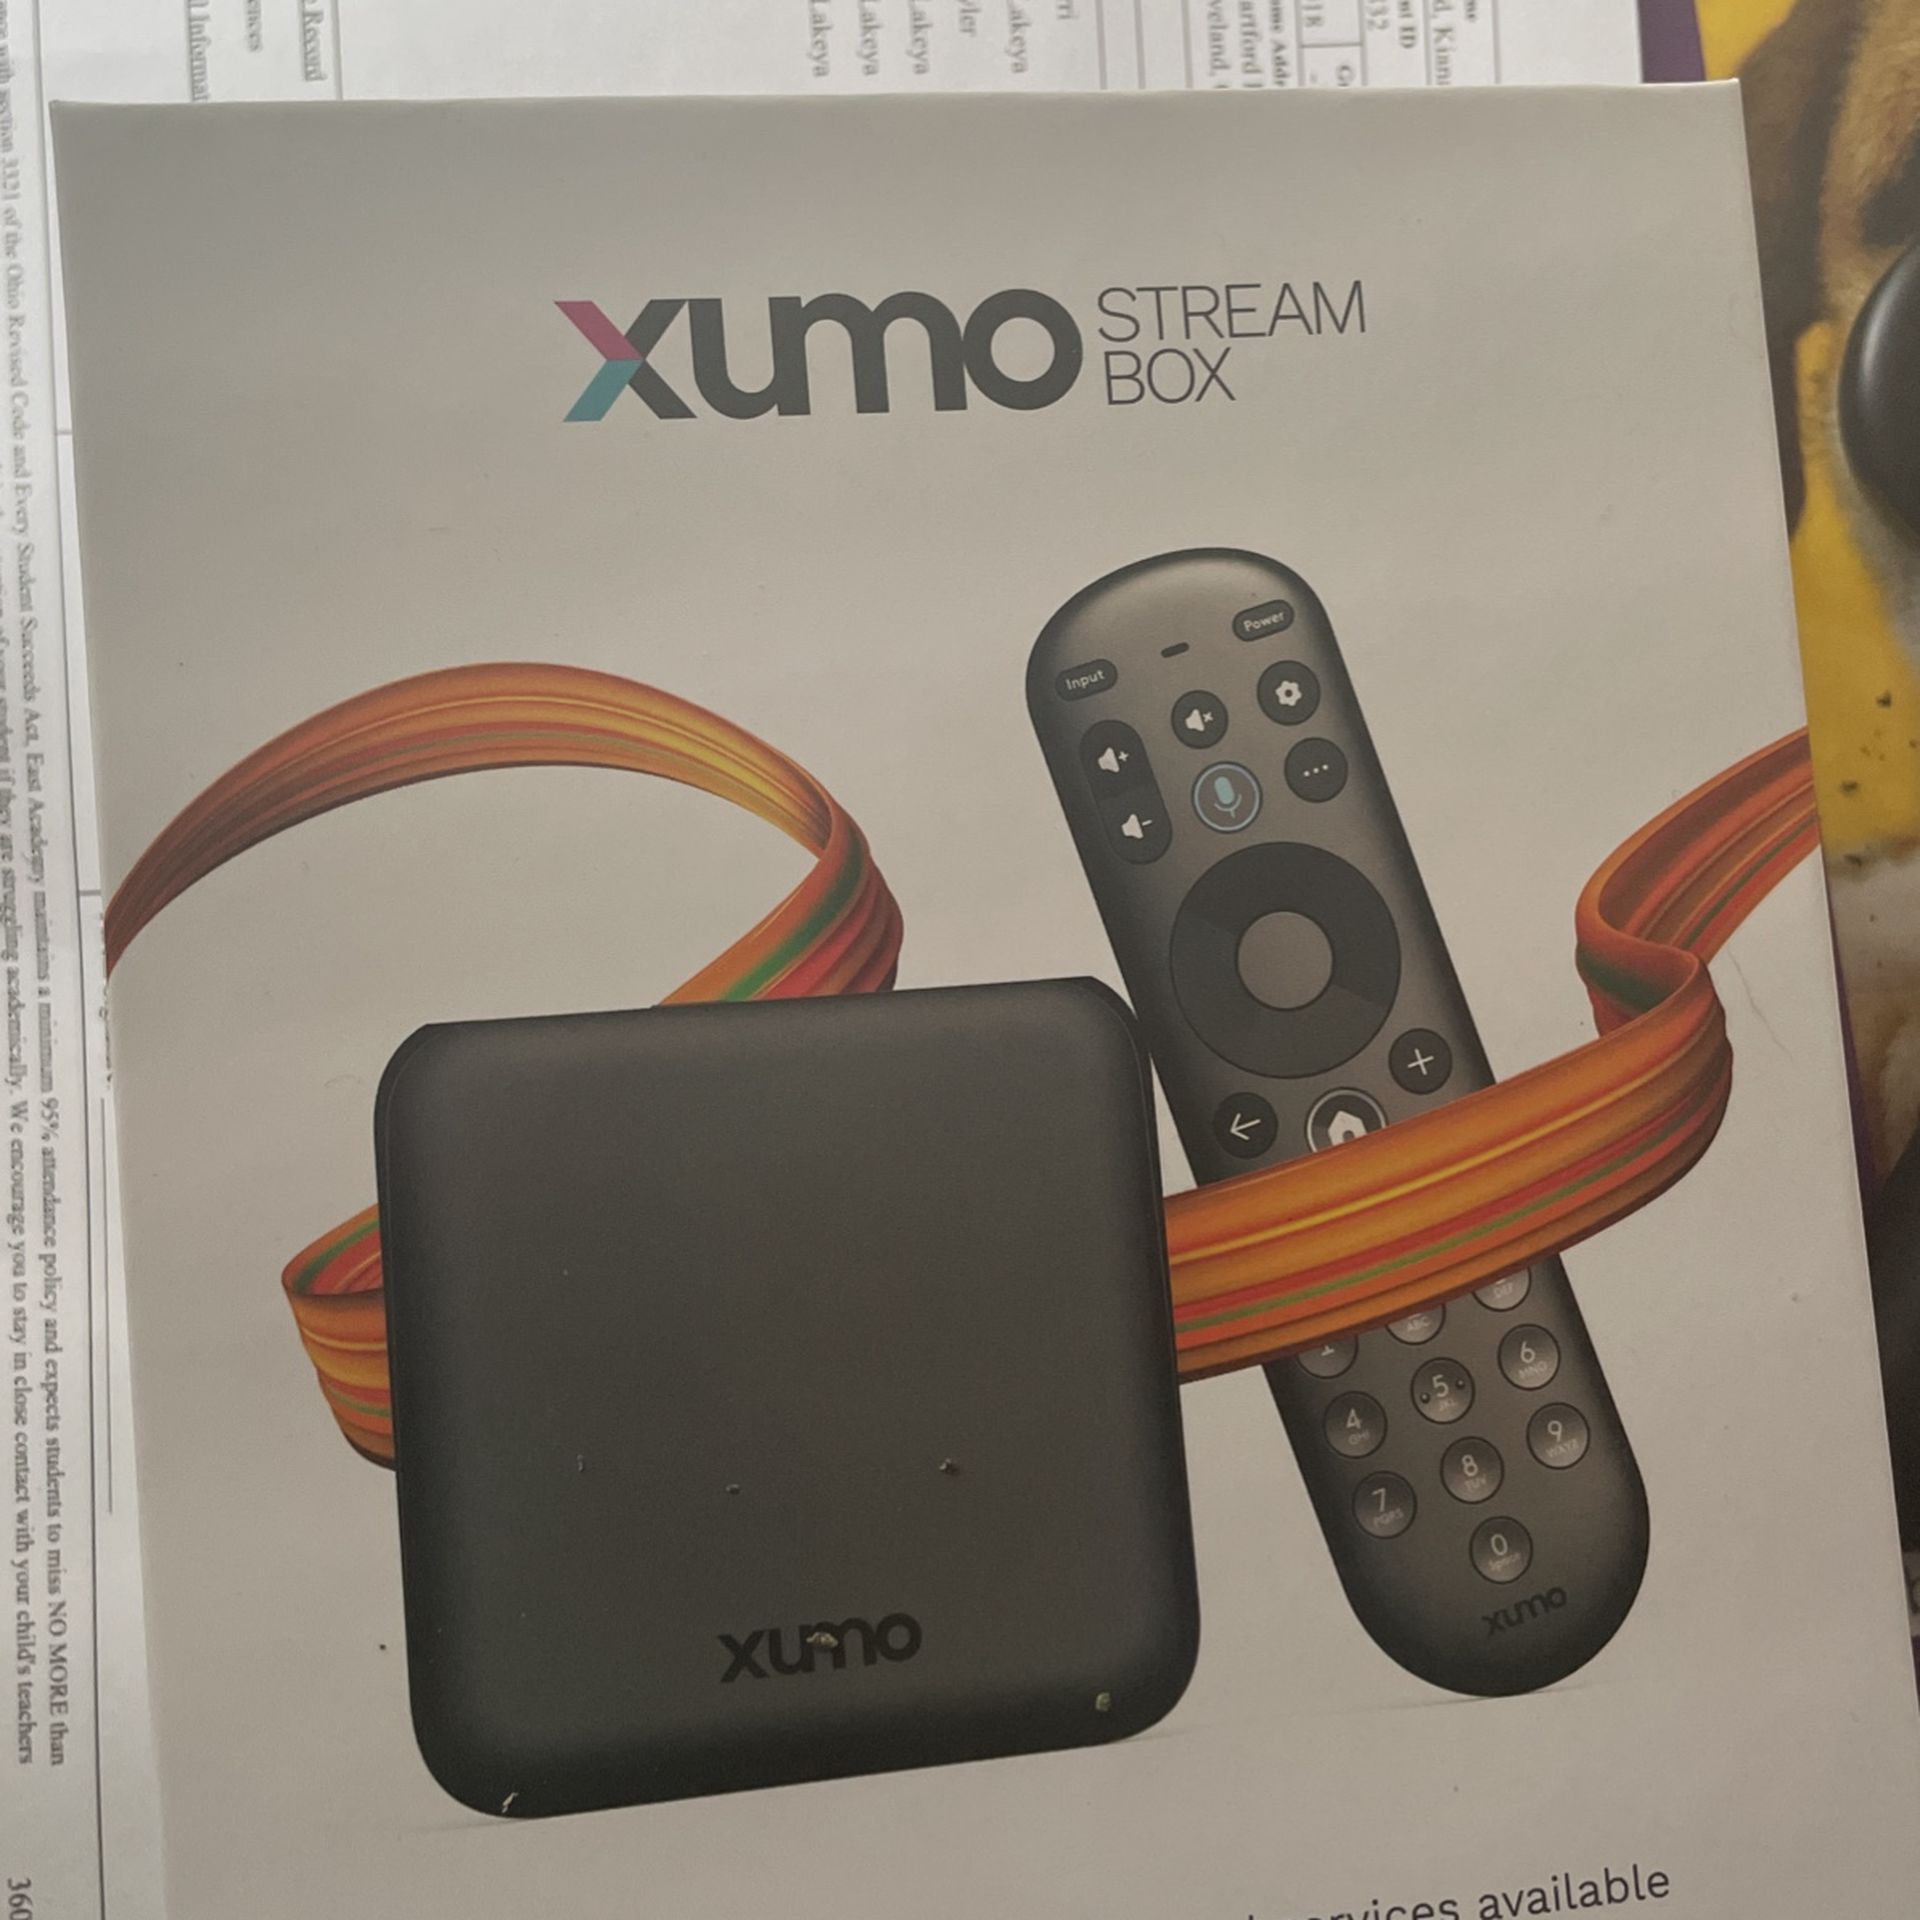 Xumo Streaming Box